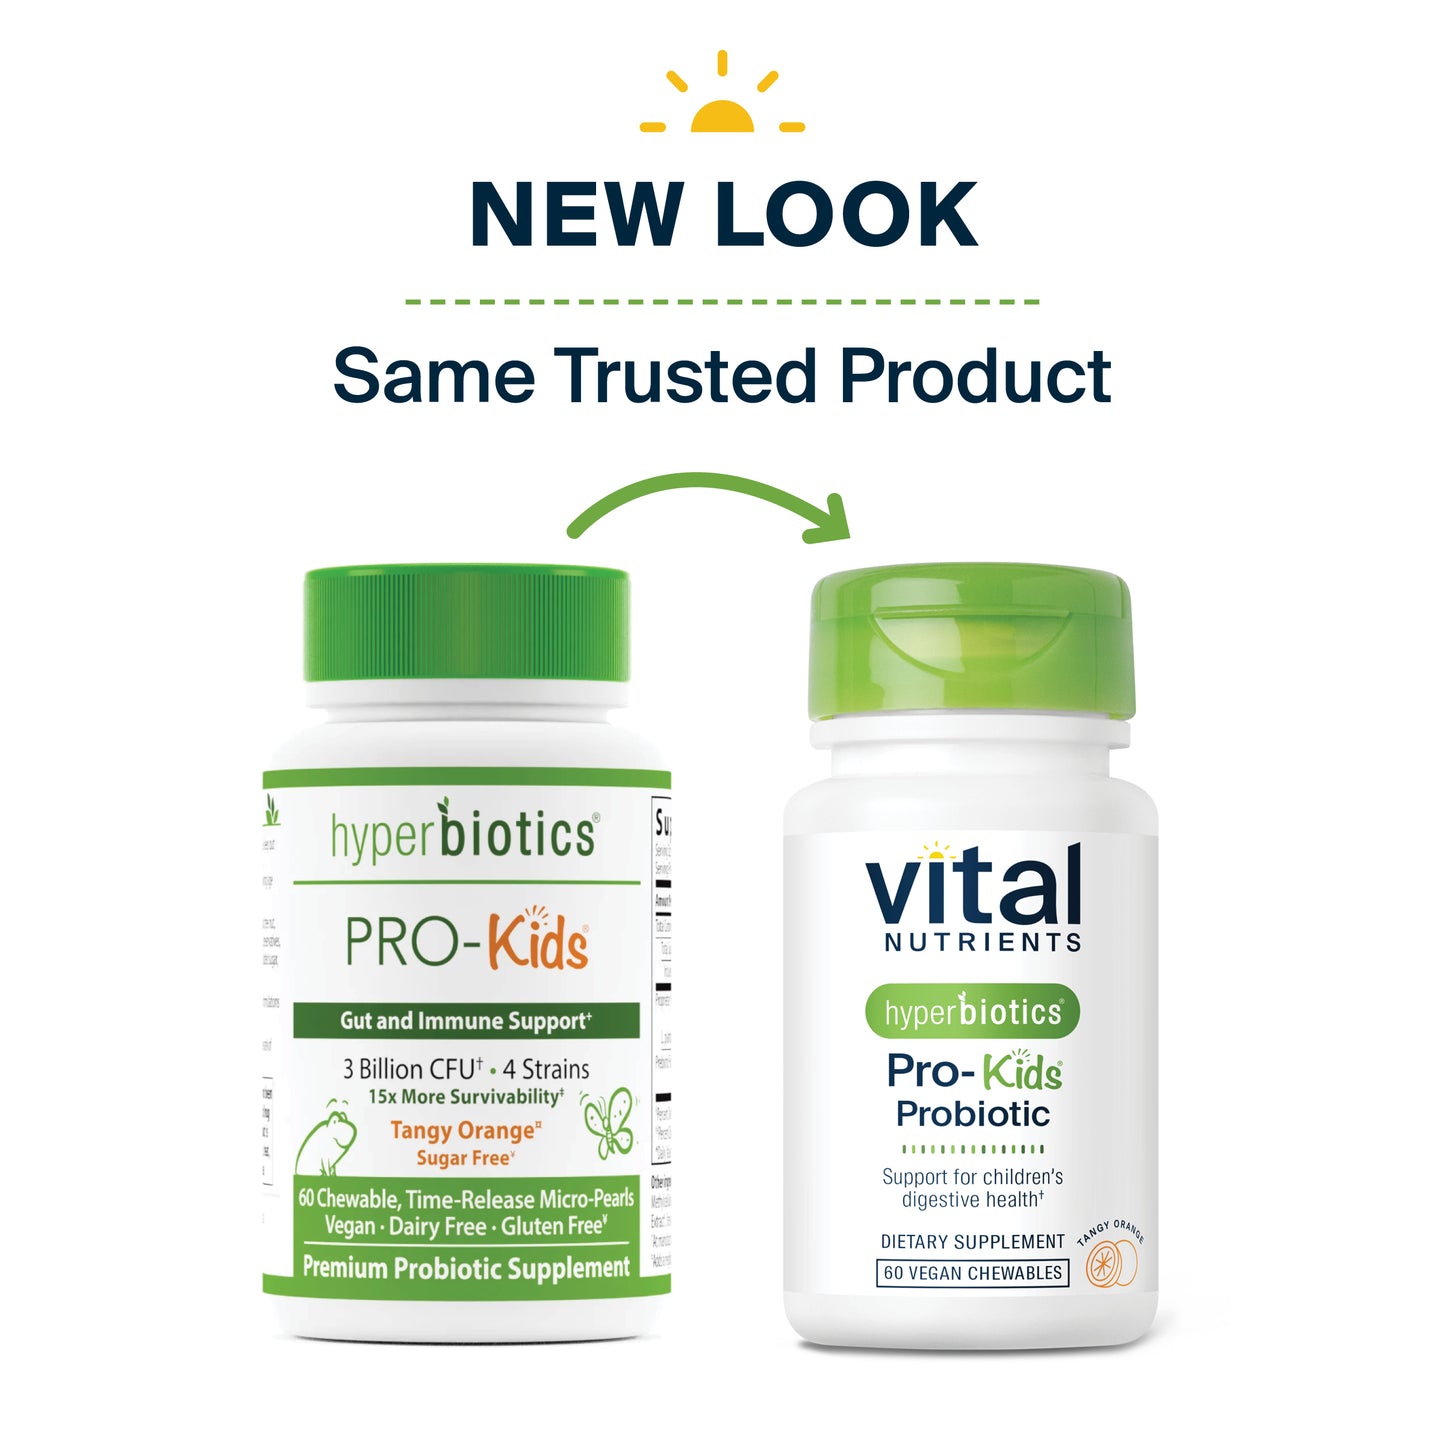 Hyperbiotics Pro-Kids Probiotic new look, same trusted product.